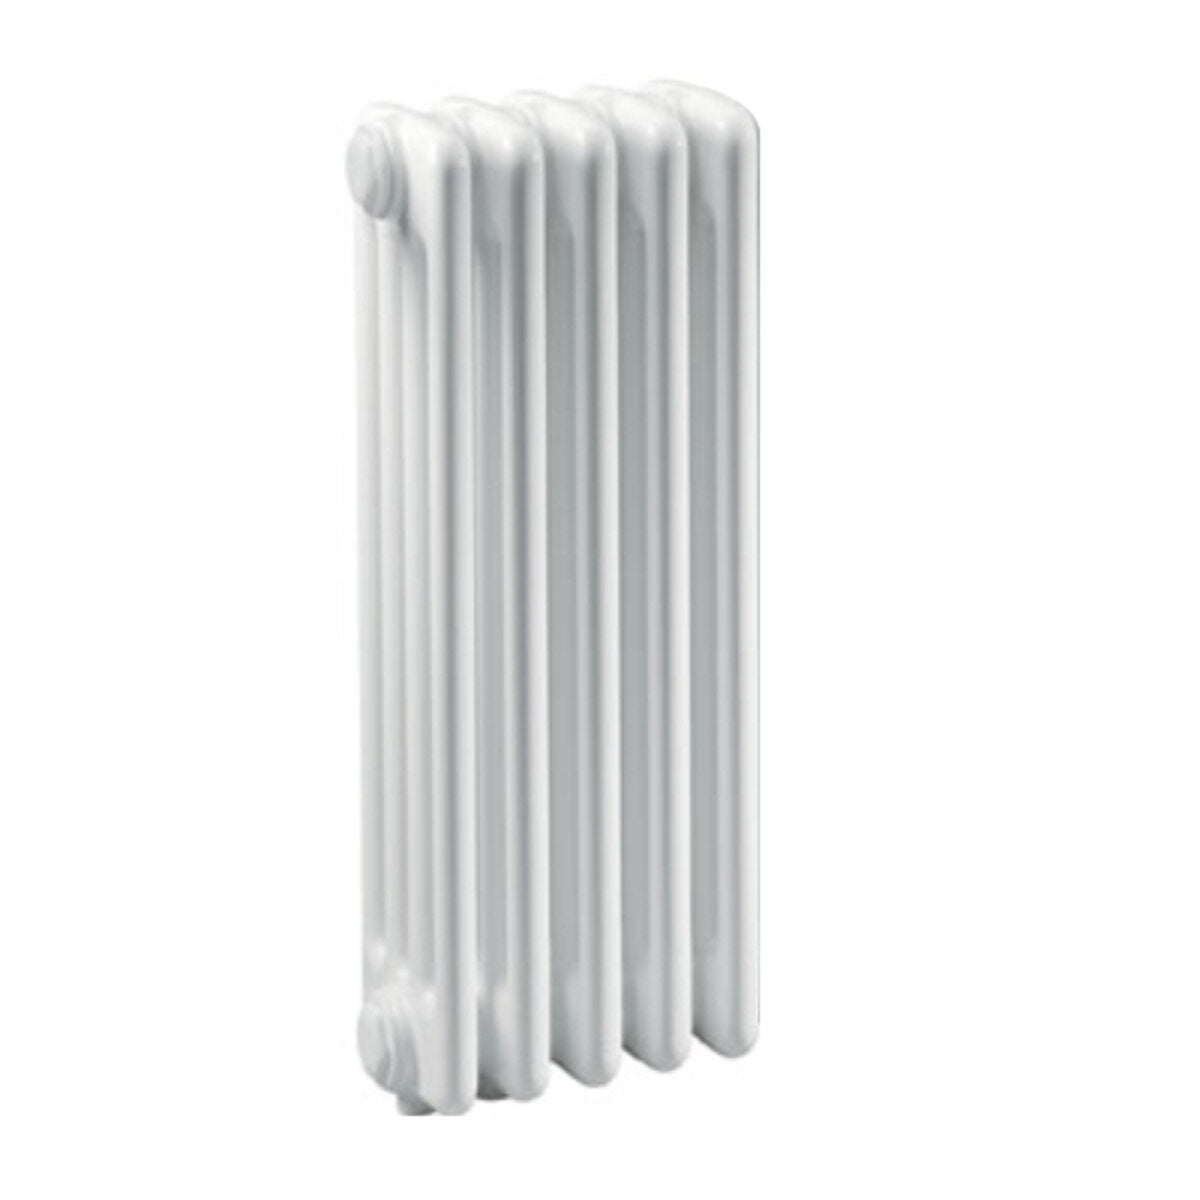 Ercos Comby steel column radiator 5 elements 3 columns center distance 935 mm